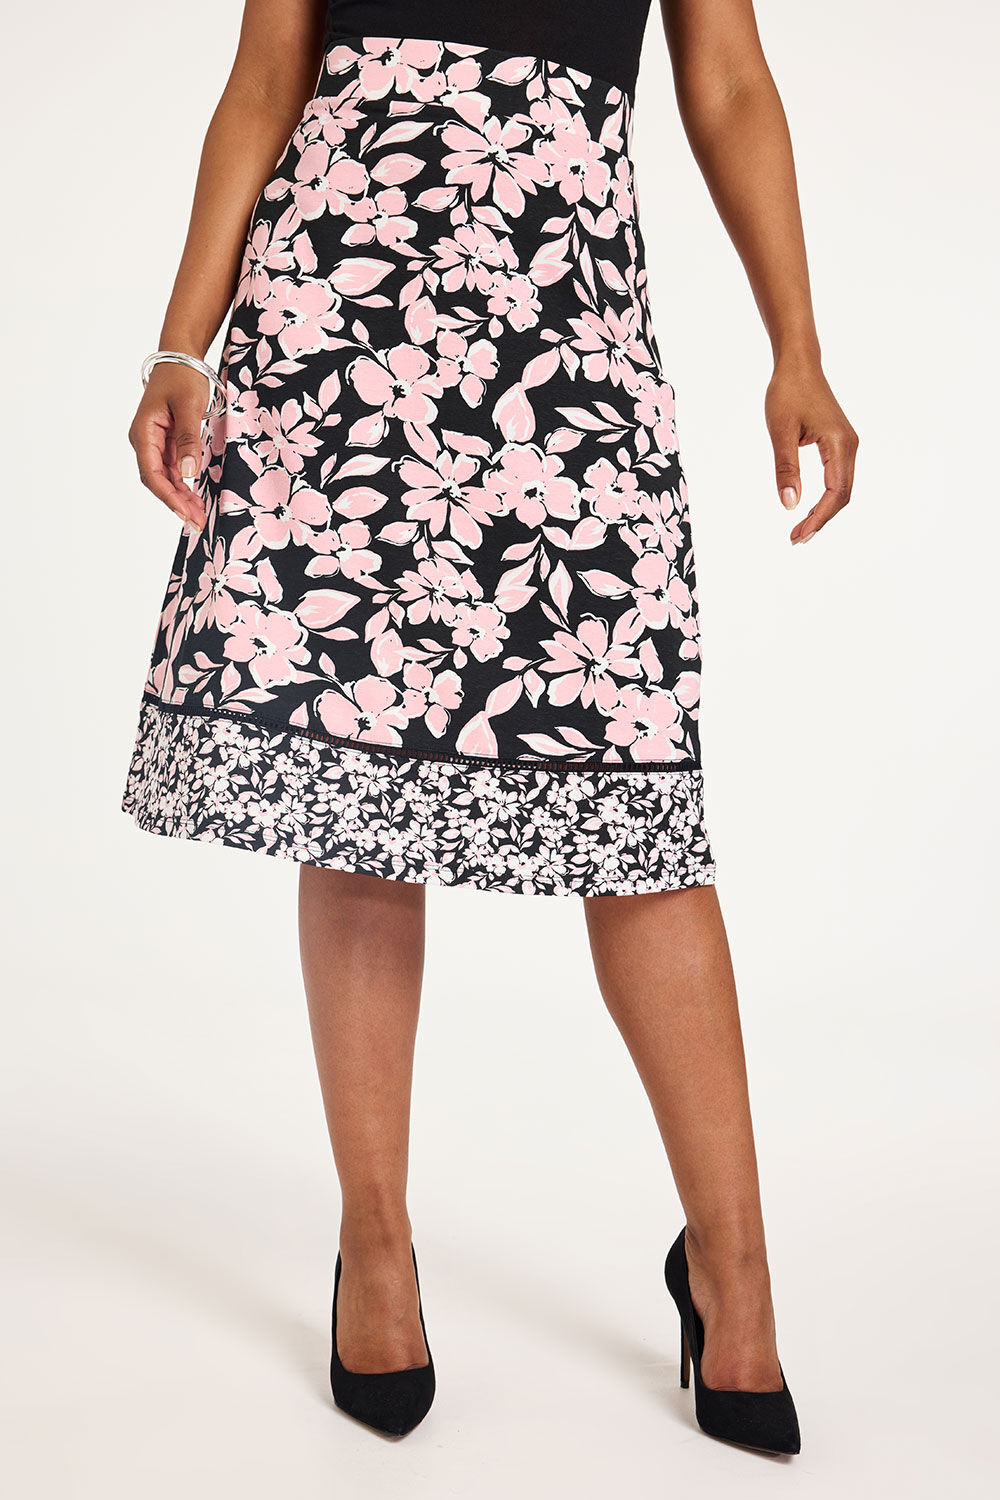 Bonmarche Black Floral Border Print A-Line Jersey Skirt, Size: 20